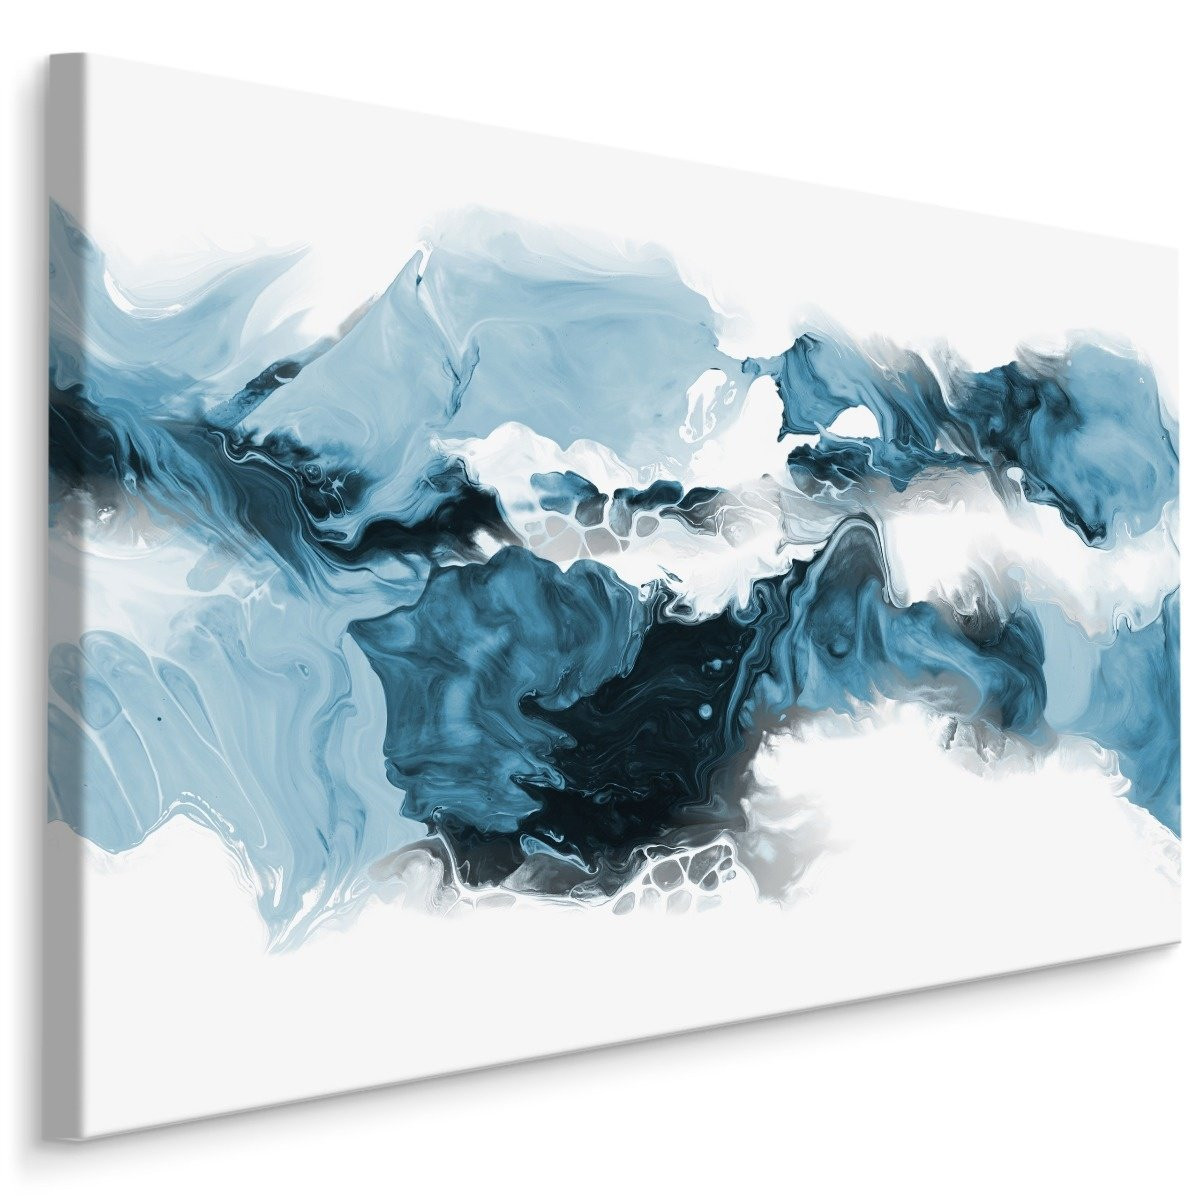 Schilderij - Blauwe Golven, Abstract, premium Print